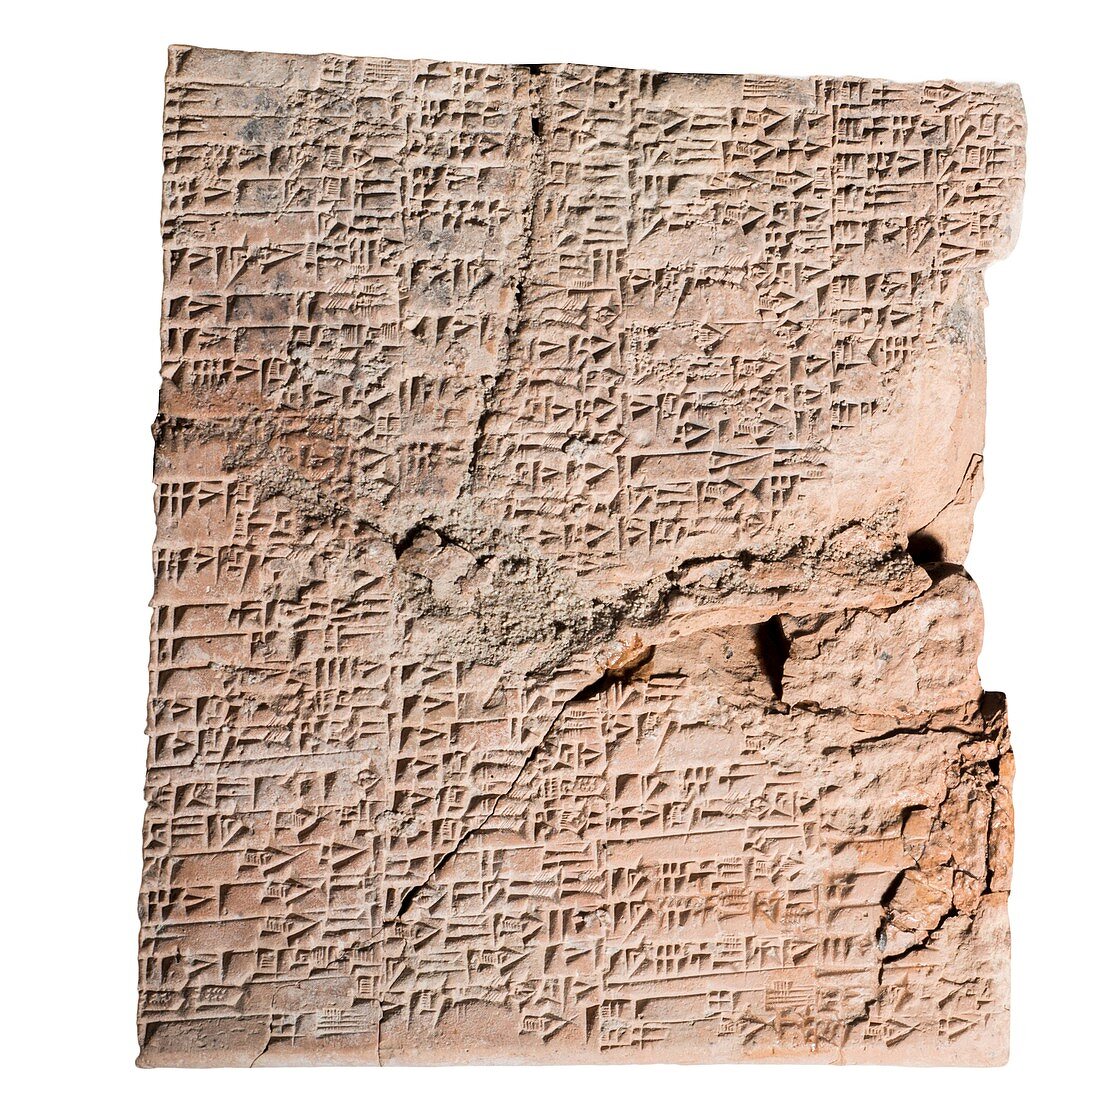 Cuneiform Clay Tablet